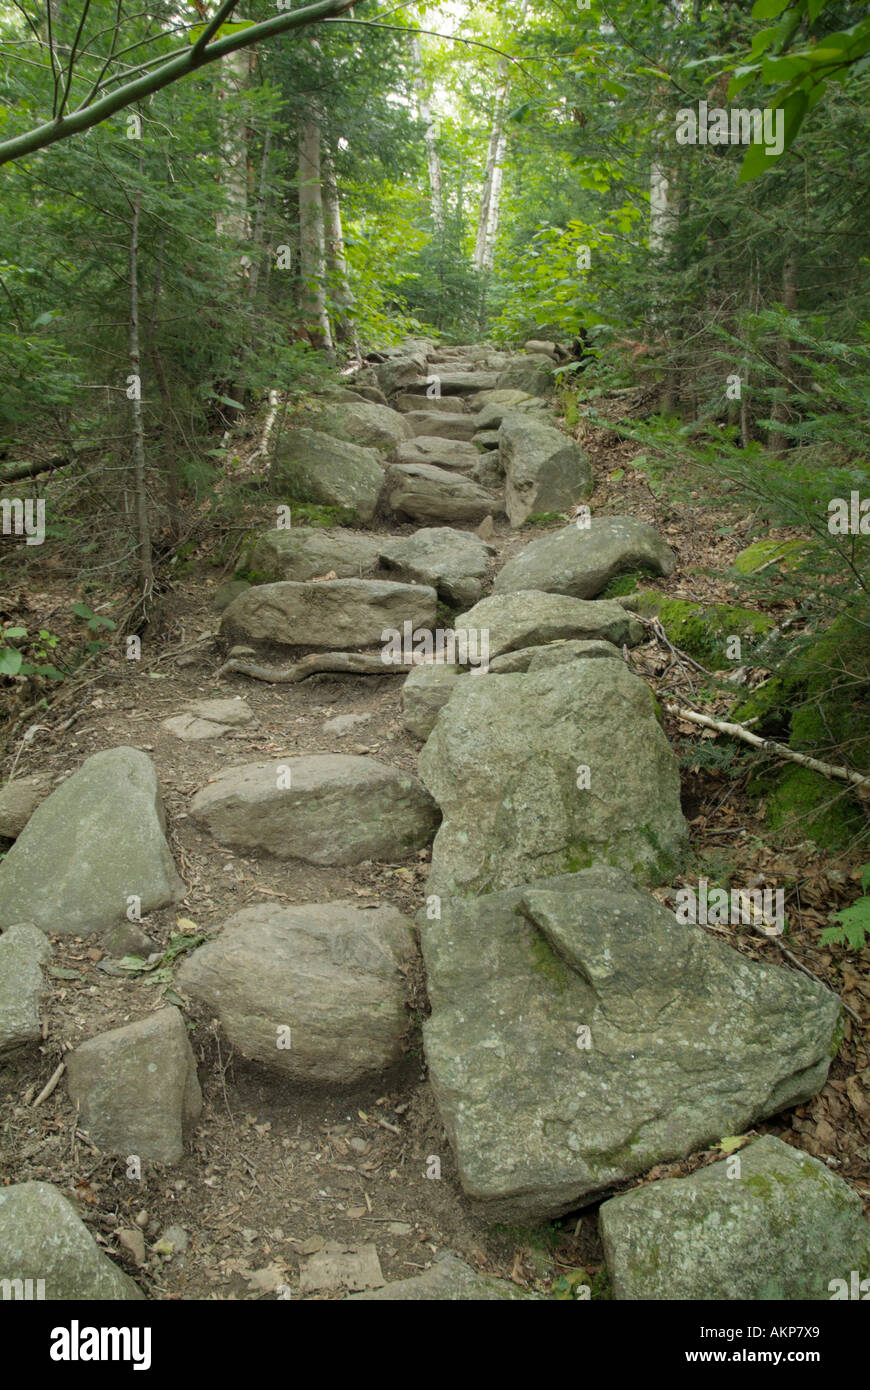 White Mountain National Forest de New Hampshire, Estados Unidos Valley forma escalera de piedra Foto de stock